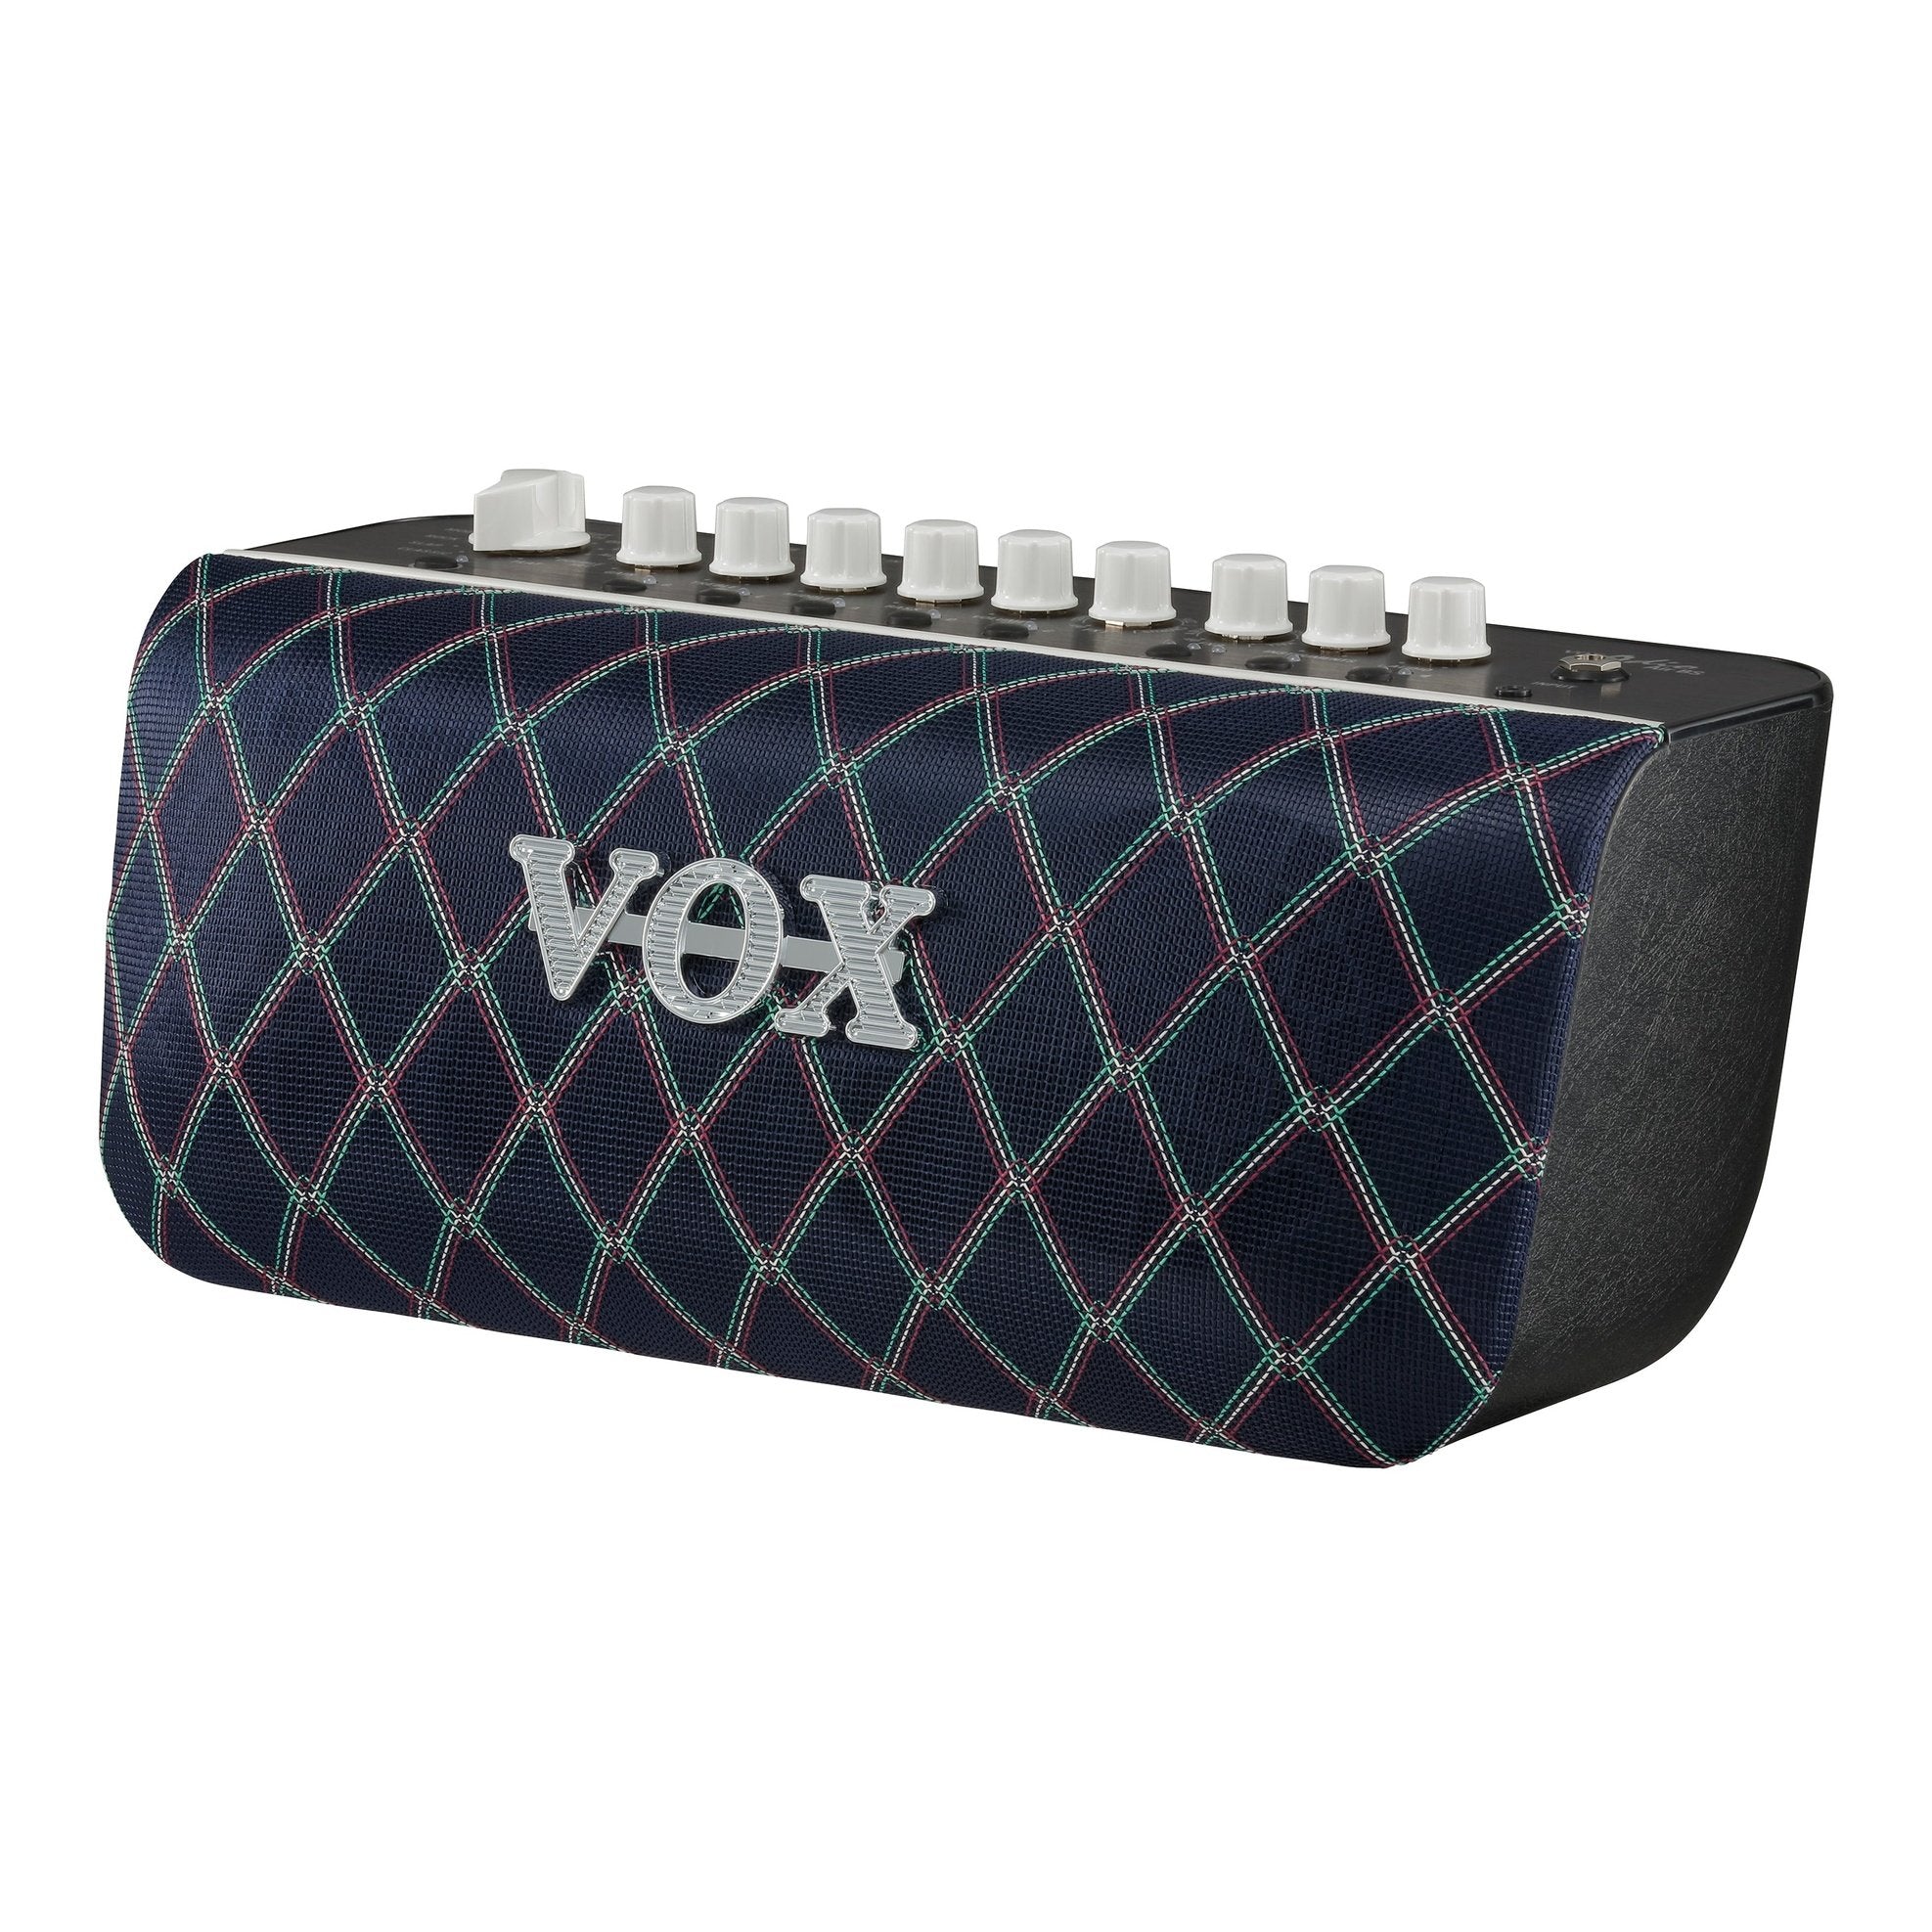 Vox Adio Air Bass Guitar Amp w/Bluetooth 3